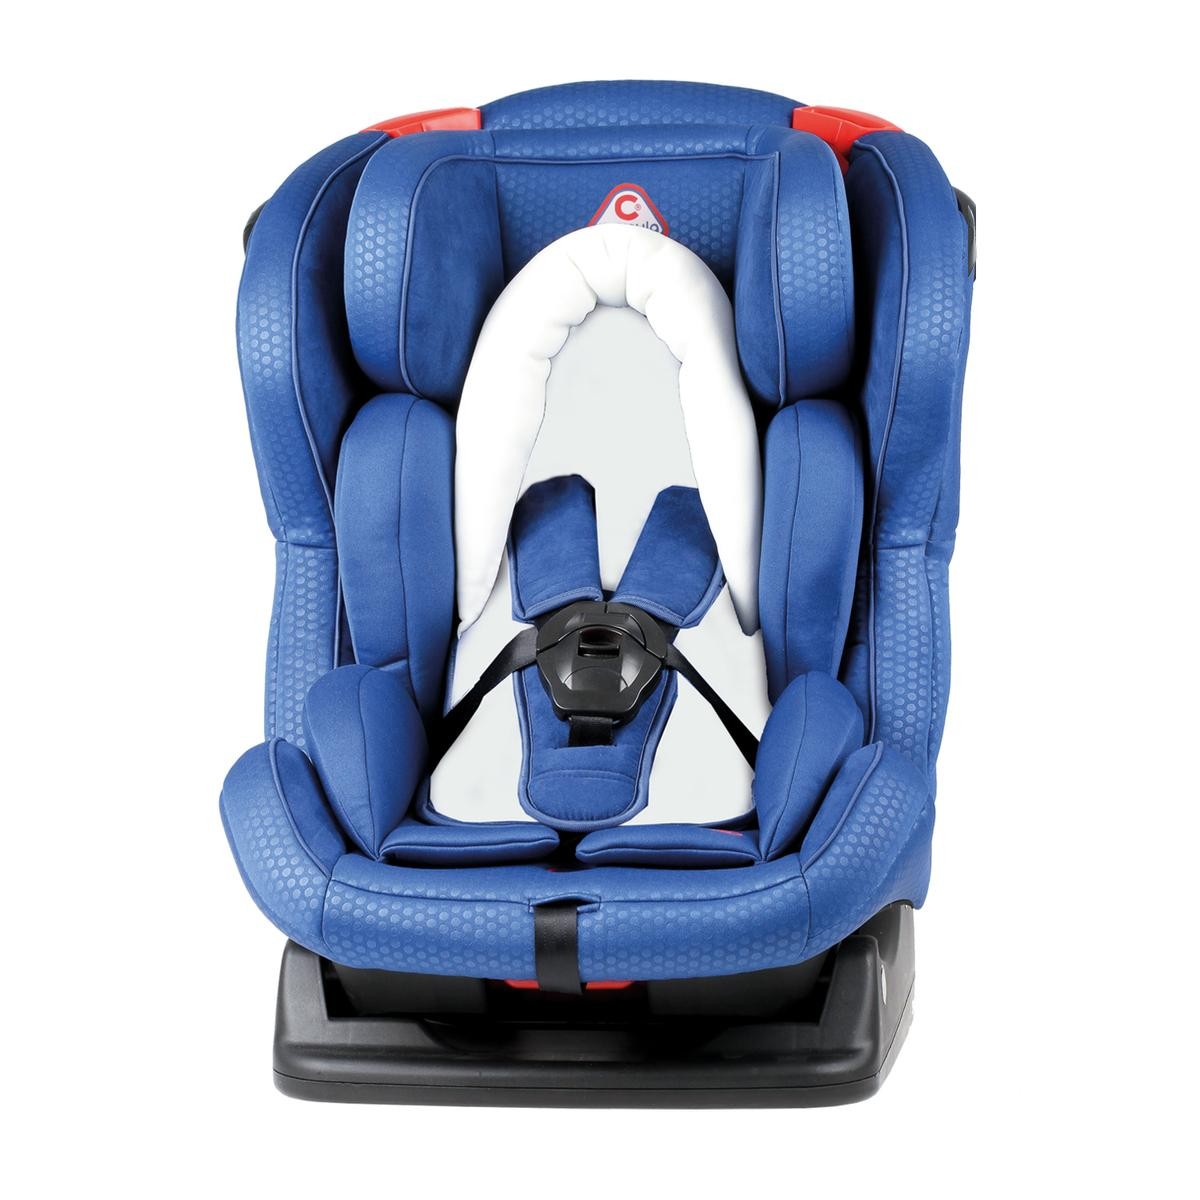 Children's car seat blue capsula MN2 777040